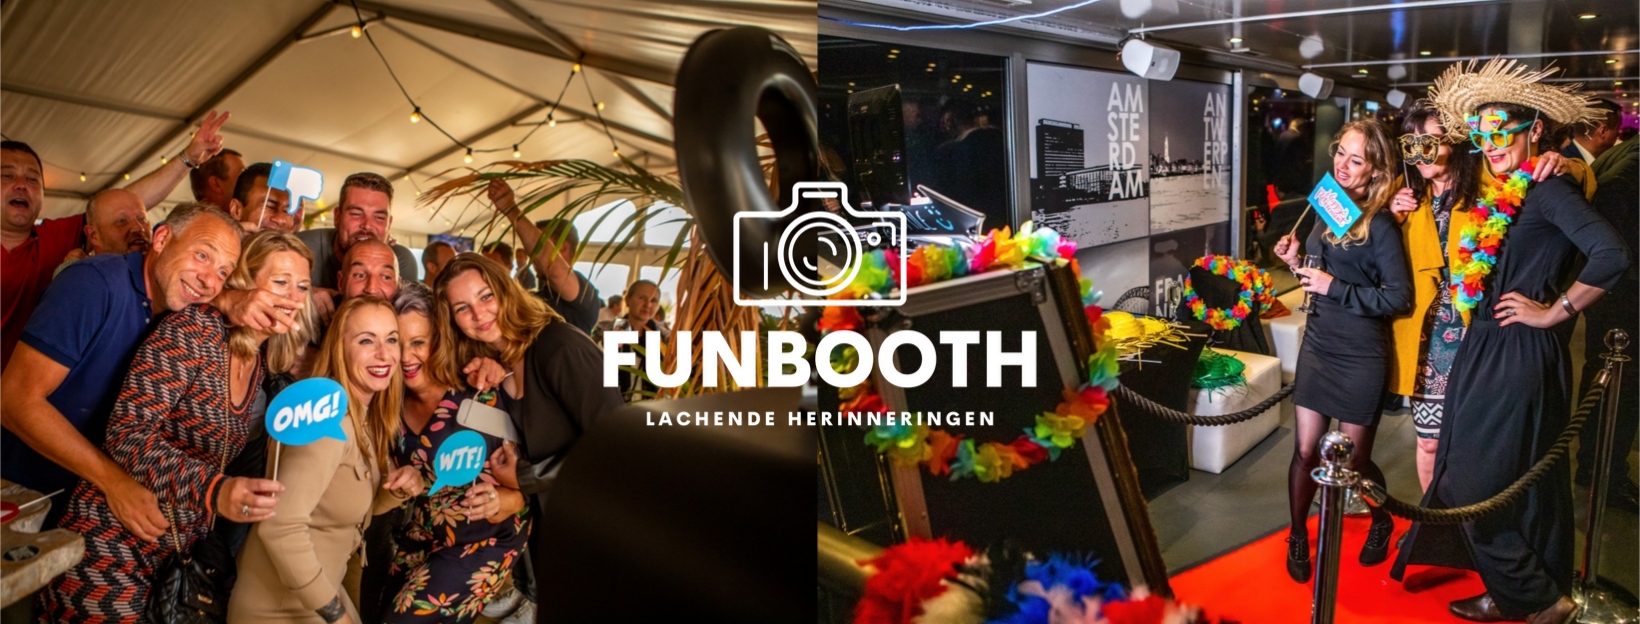 fotografen Sint-Kruis | Funbooth